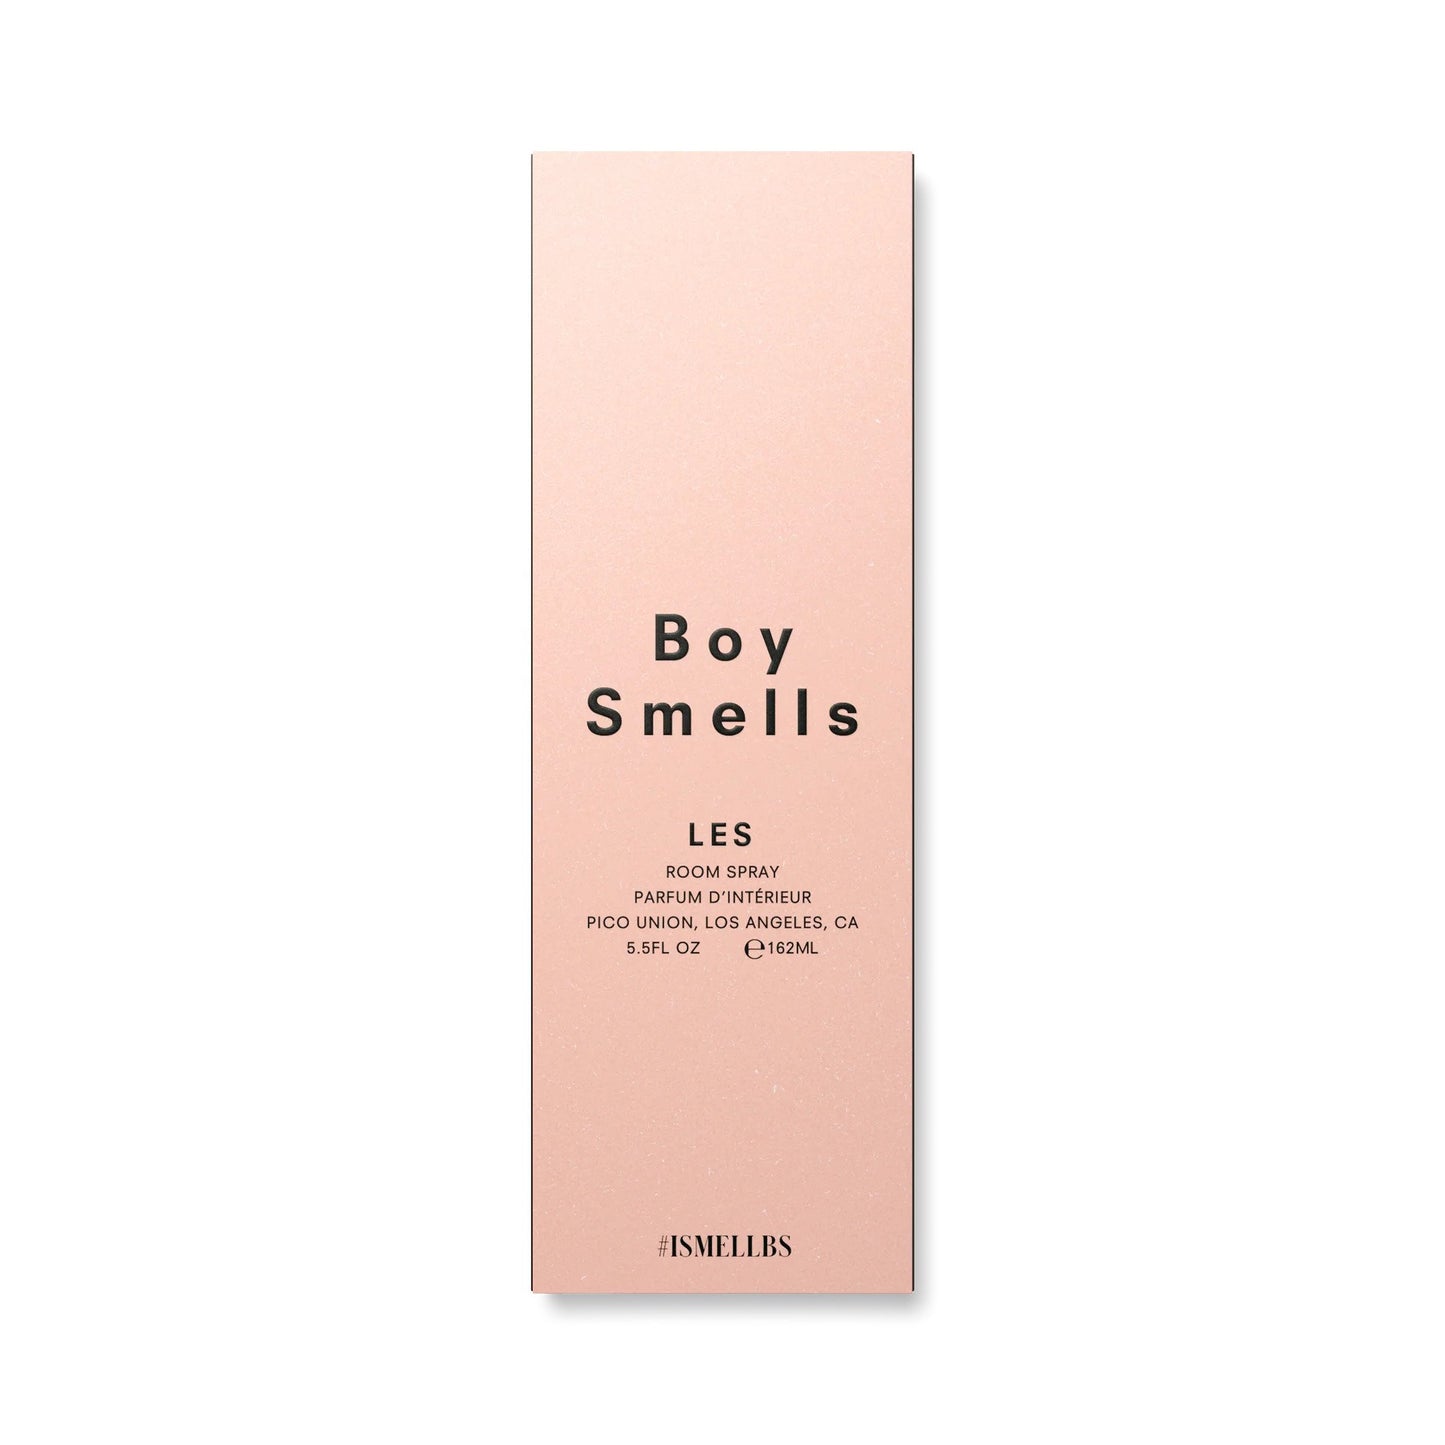 Room spray LES | Boy Smells